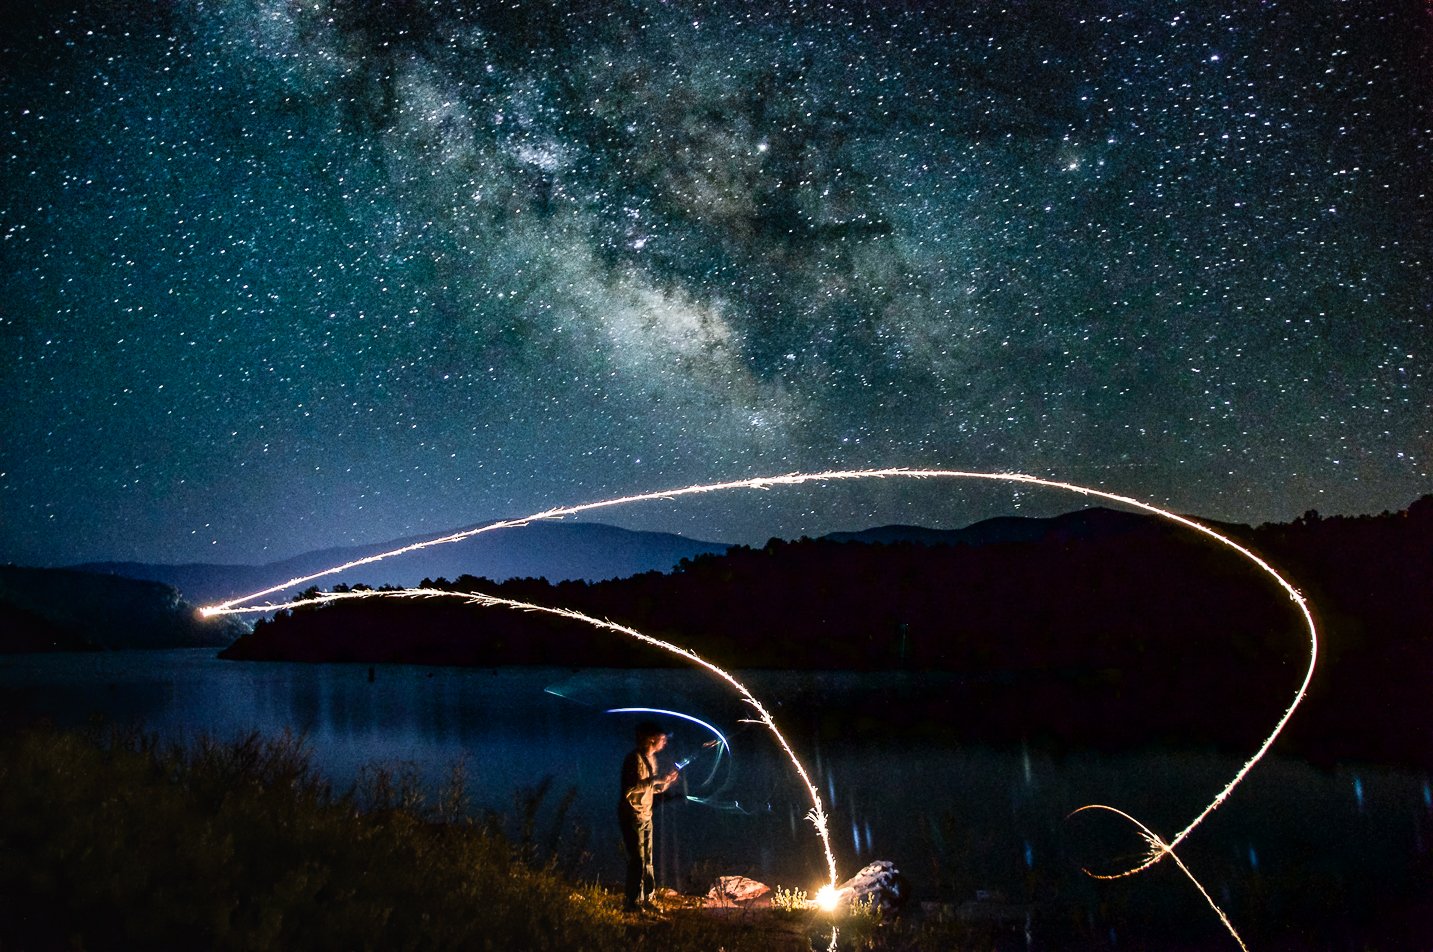 Fishing under the Milky Way - Flaming Gorge Utah